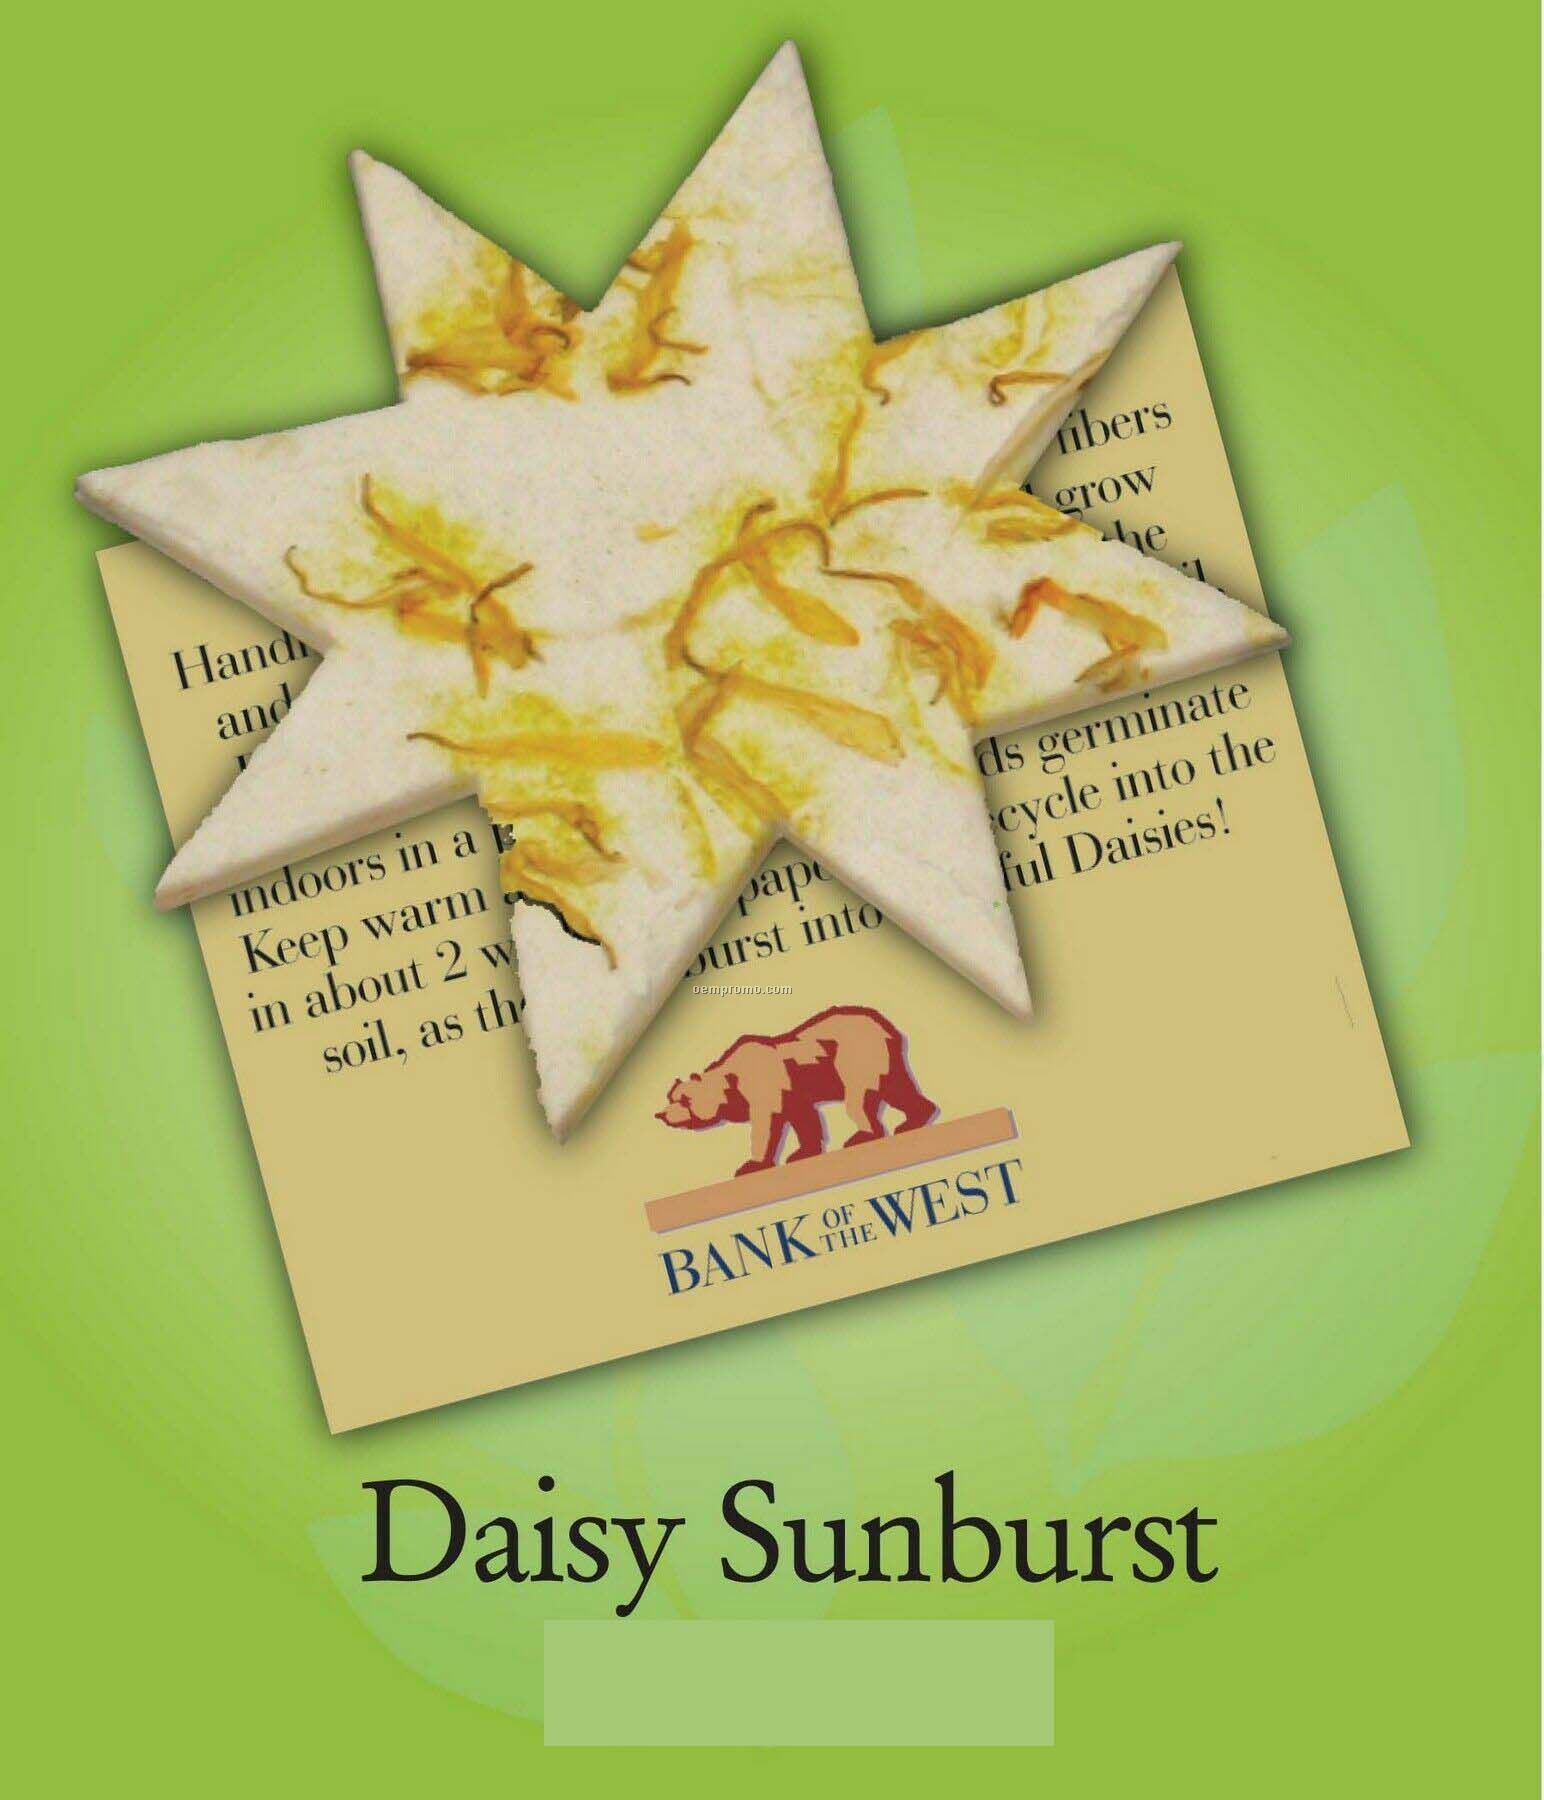 Daisy Sunburst Ornament With Embedded Seed